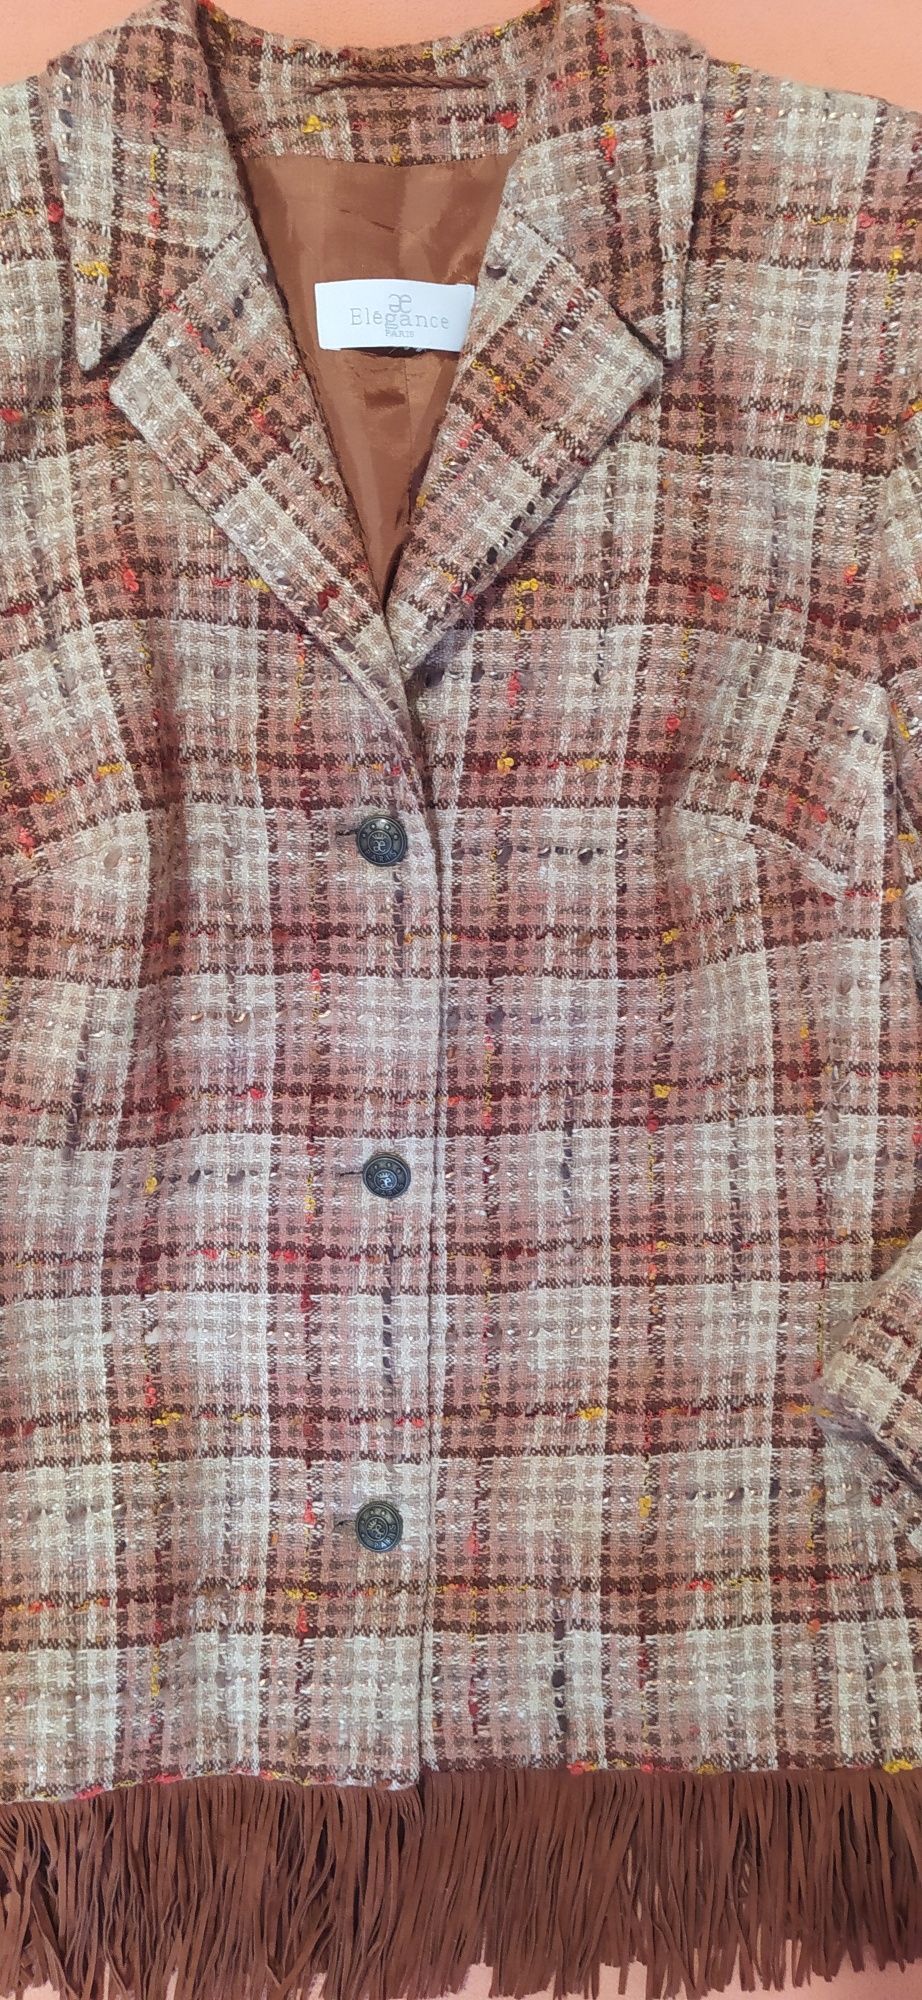 Пиджак твидовый с бахромой, Франция, р.L (50-52).